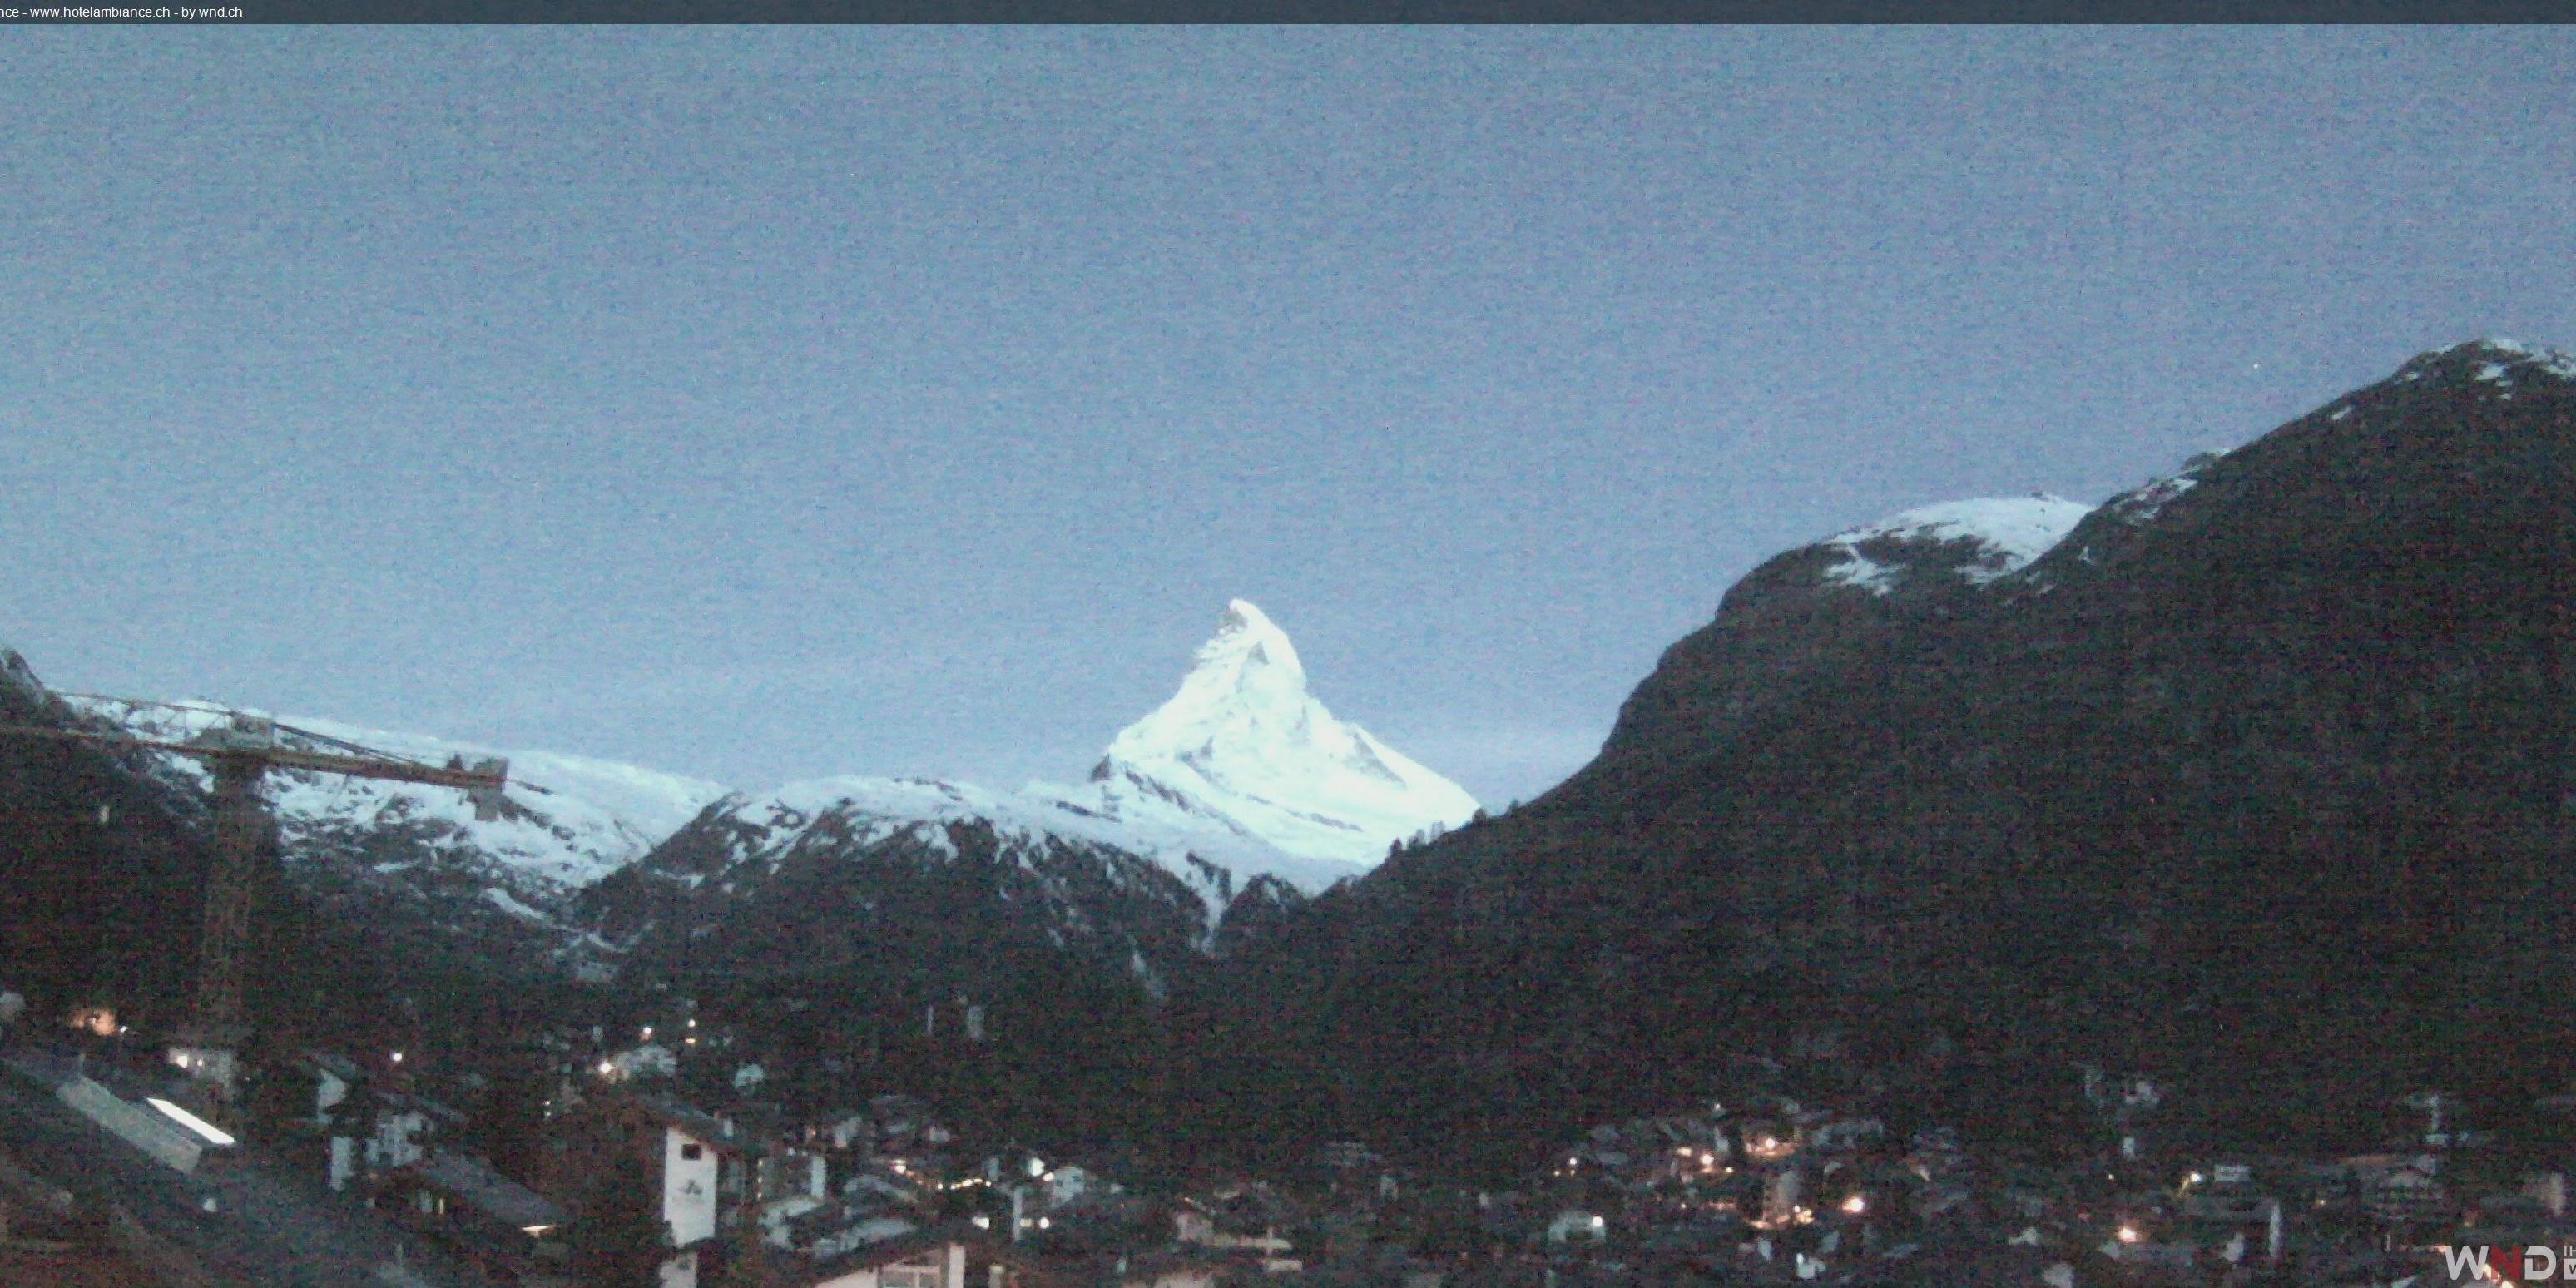 Zermatt Man. 05:18